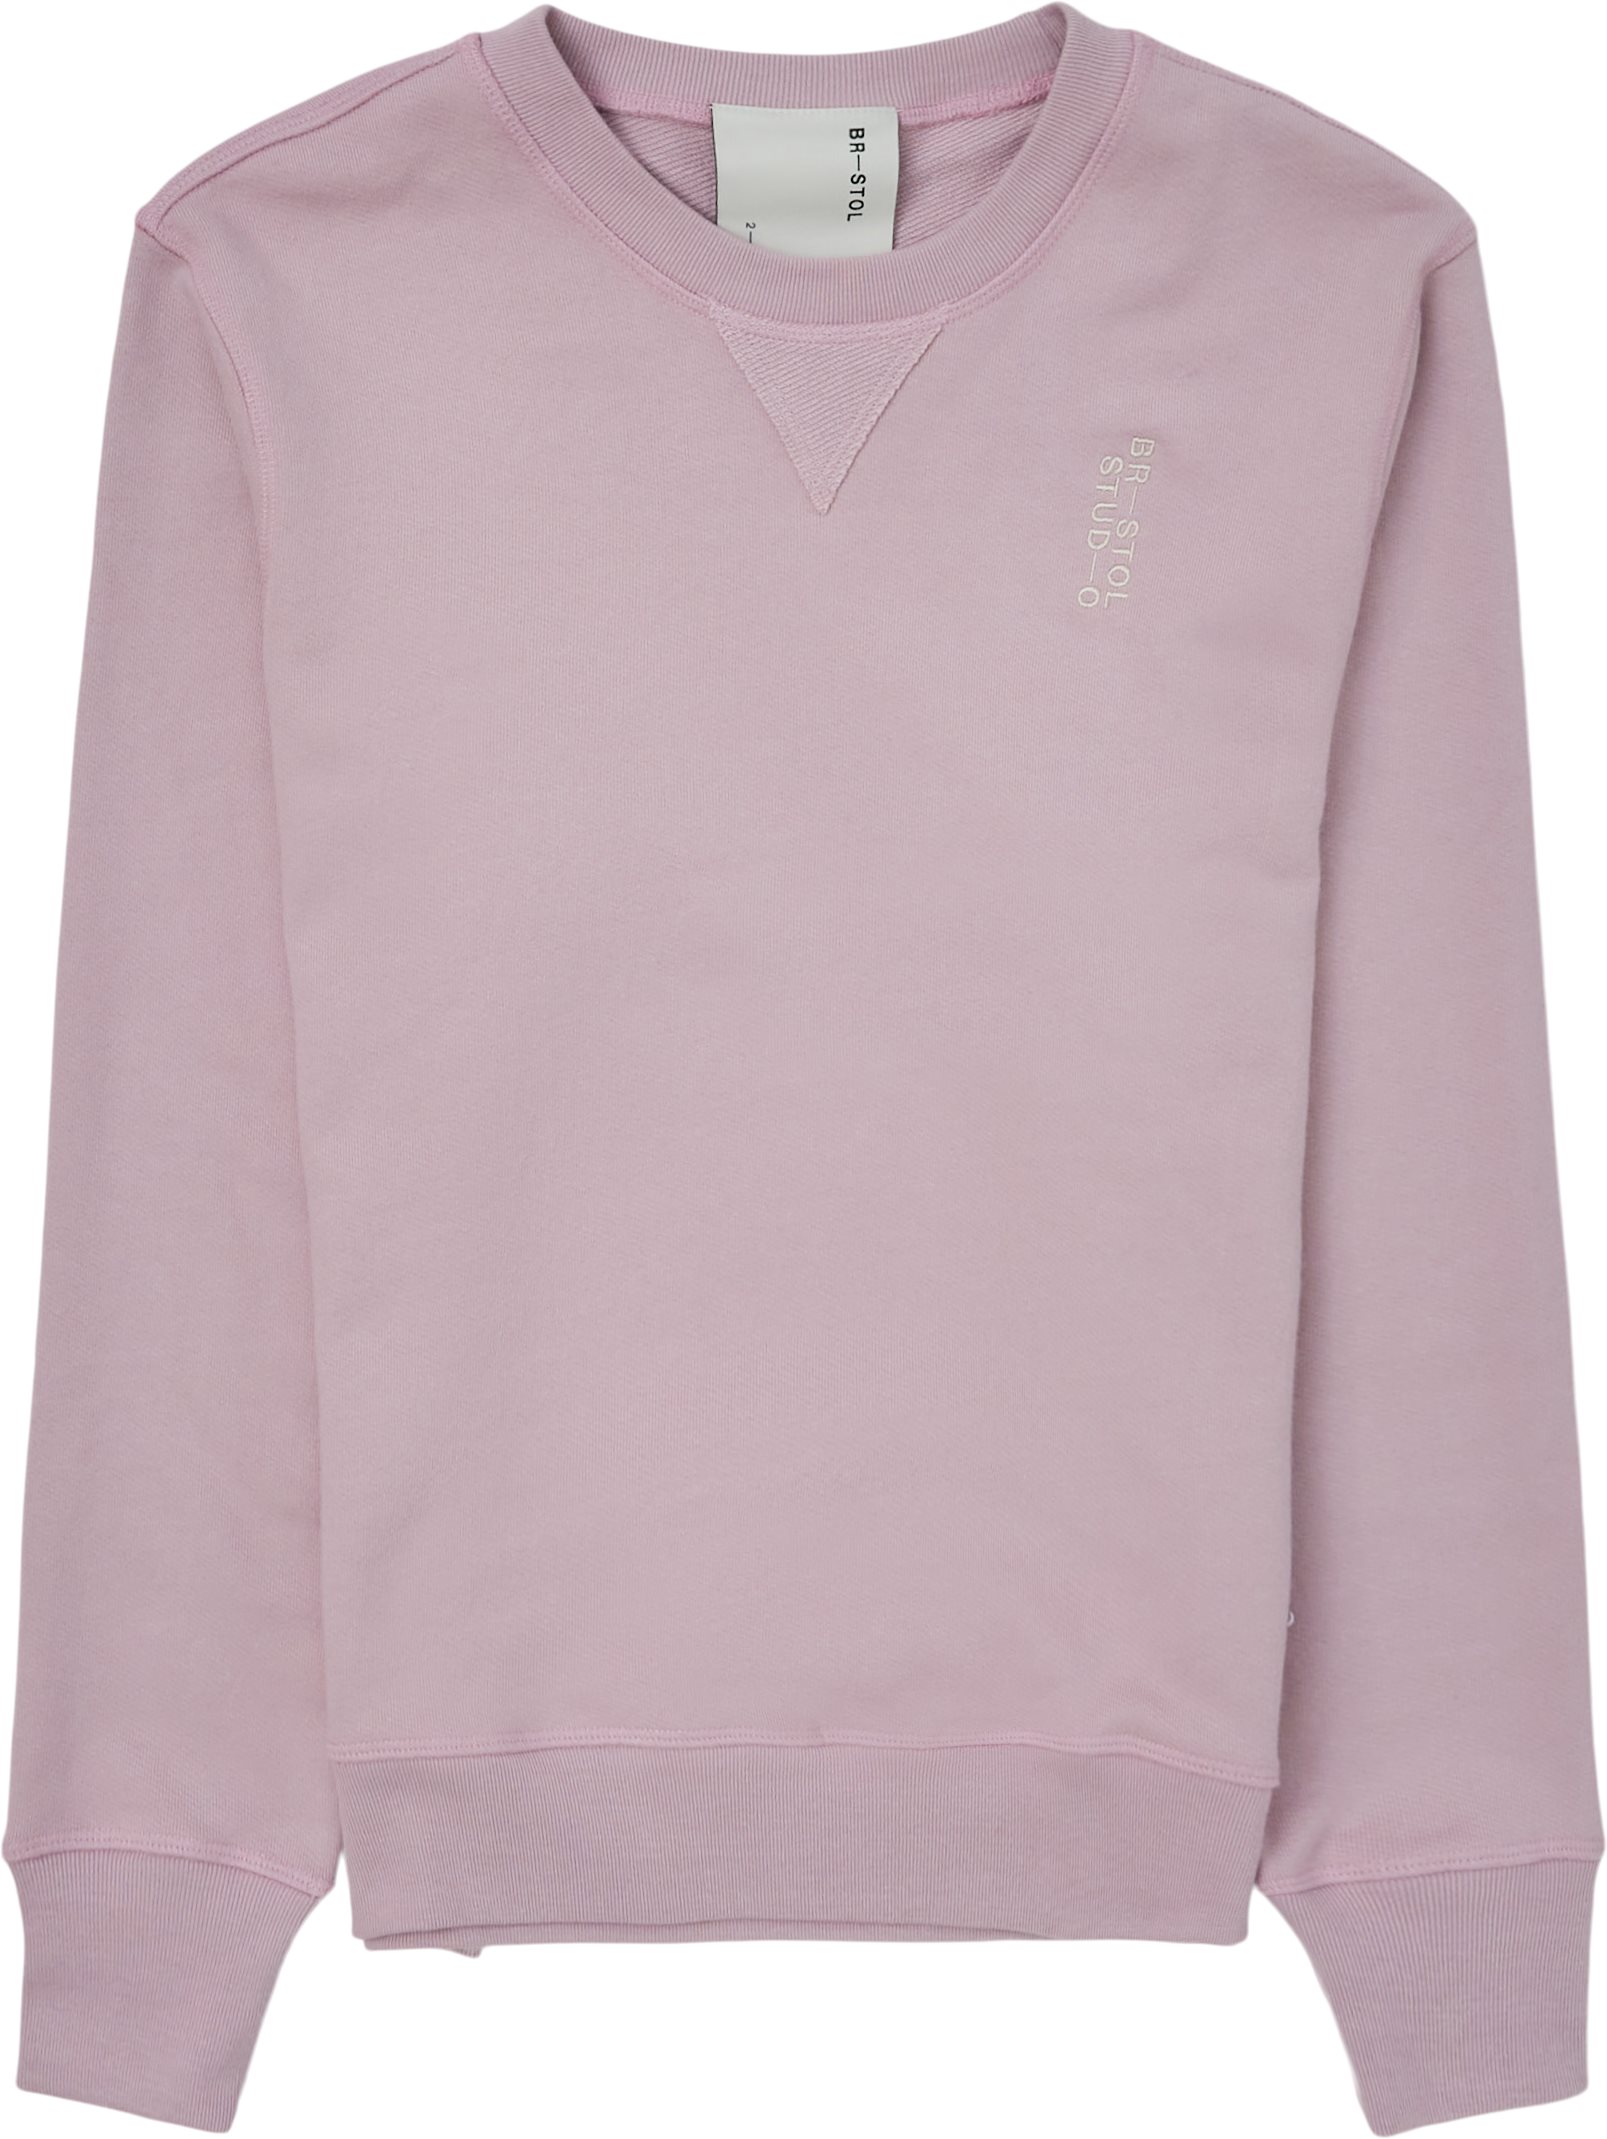 Signature Crewneck - Sweatshirts - Oversize fit - Lilla